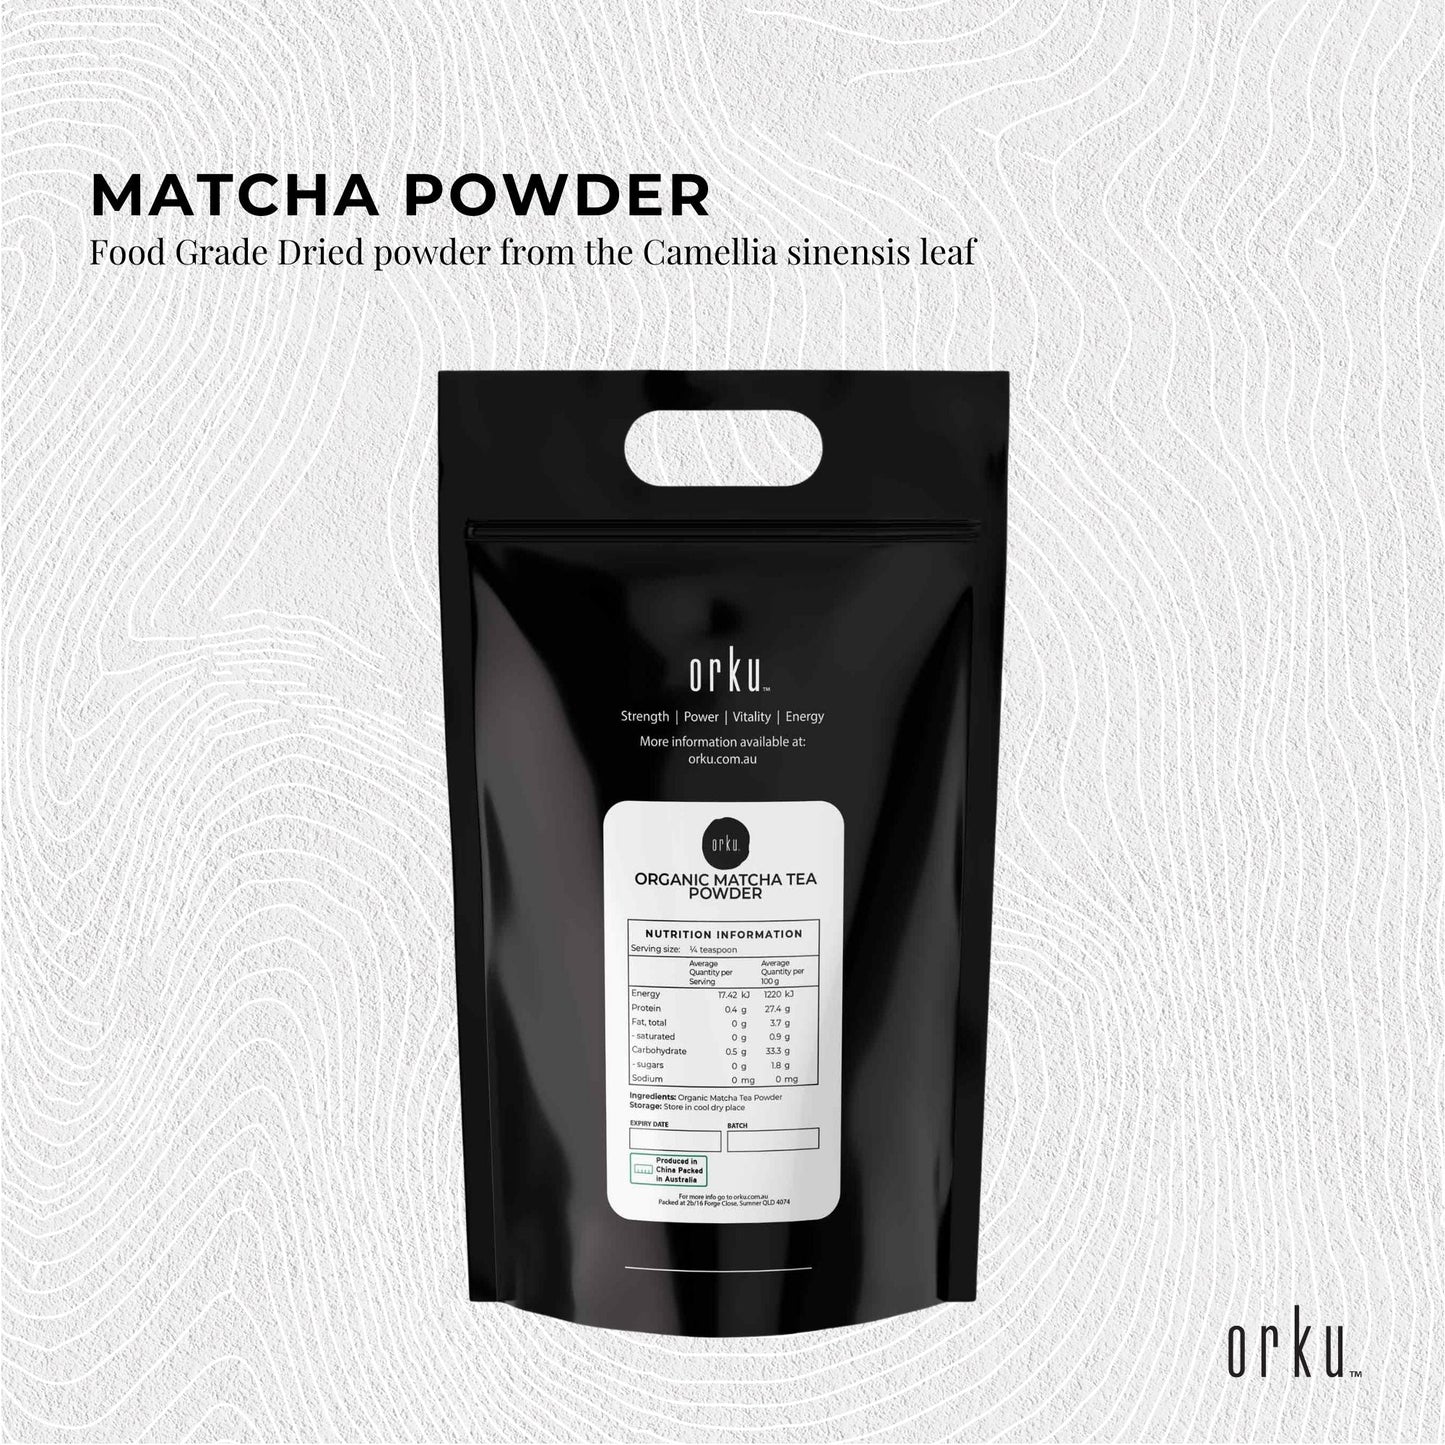 5Kg Organic Matcha Green Tea Powder Camellia Sinensis Leaf Supplement